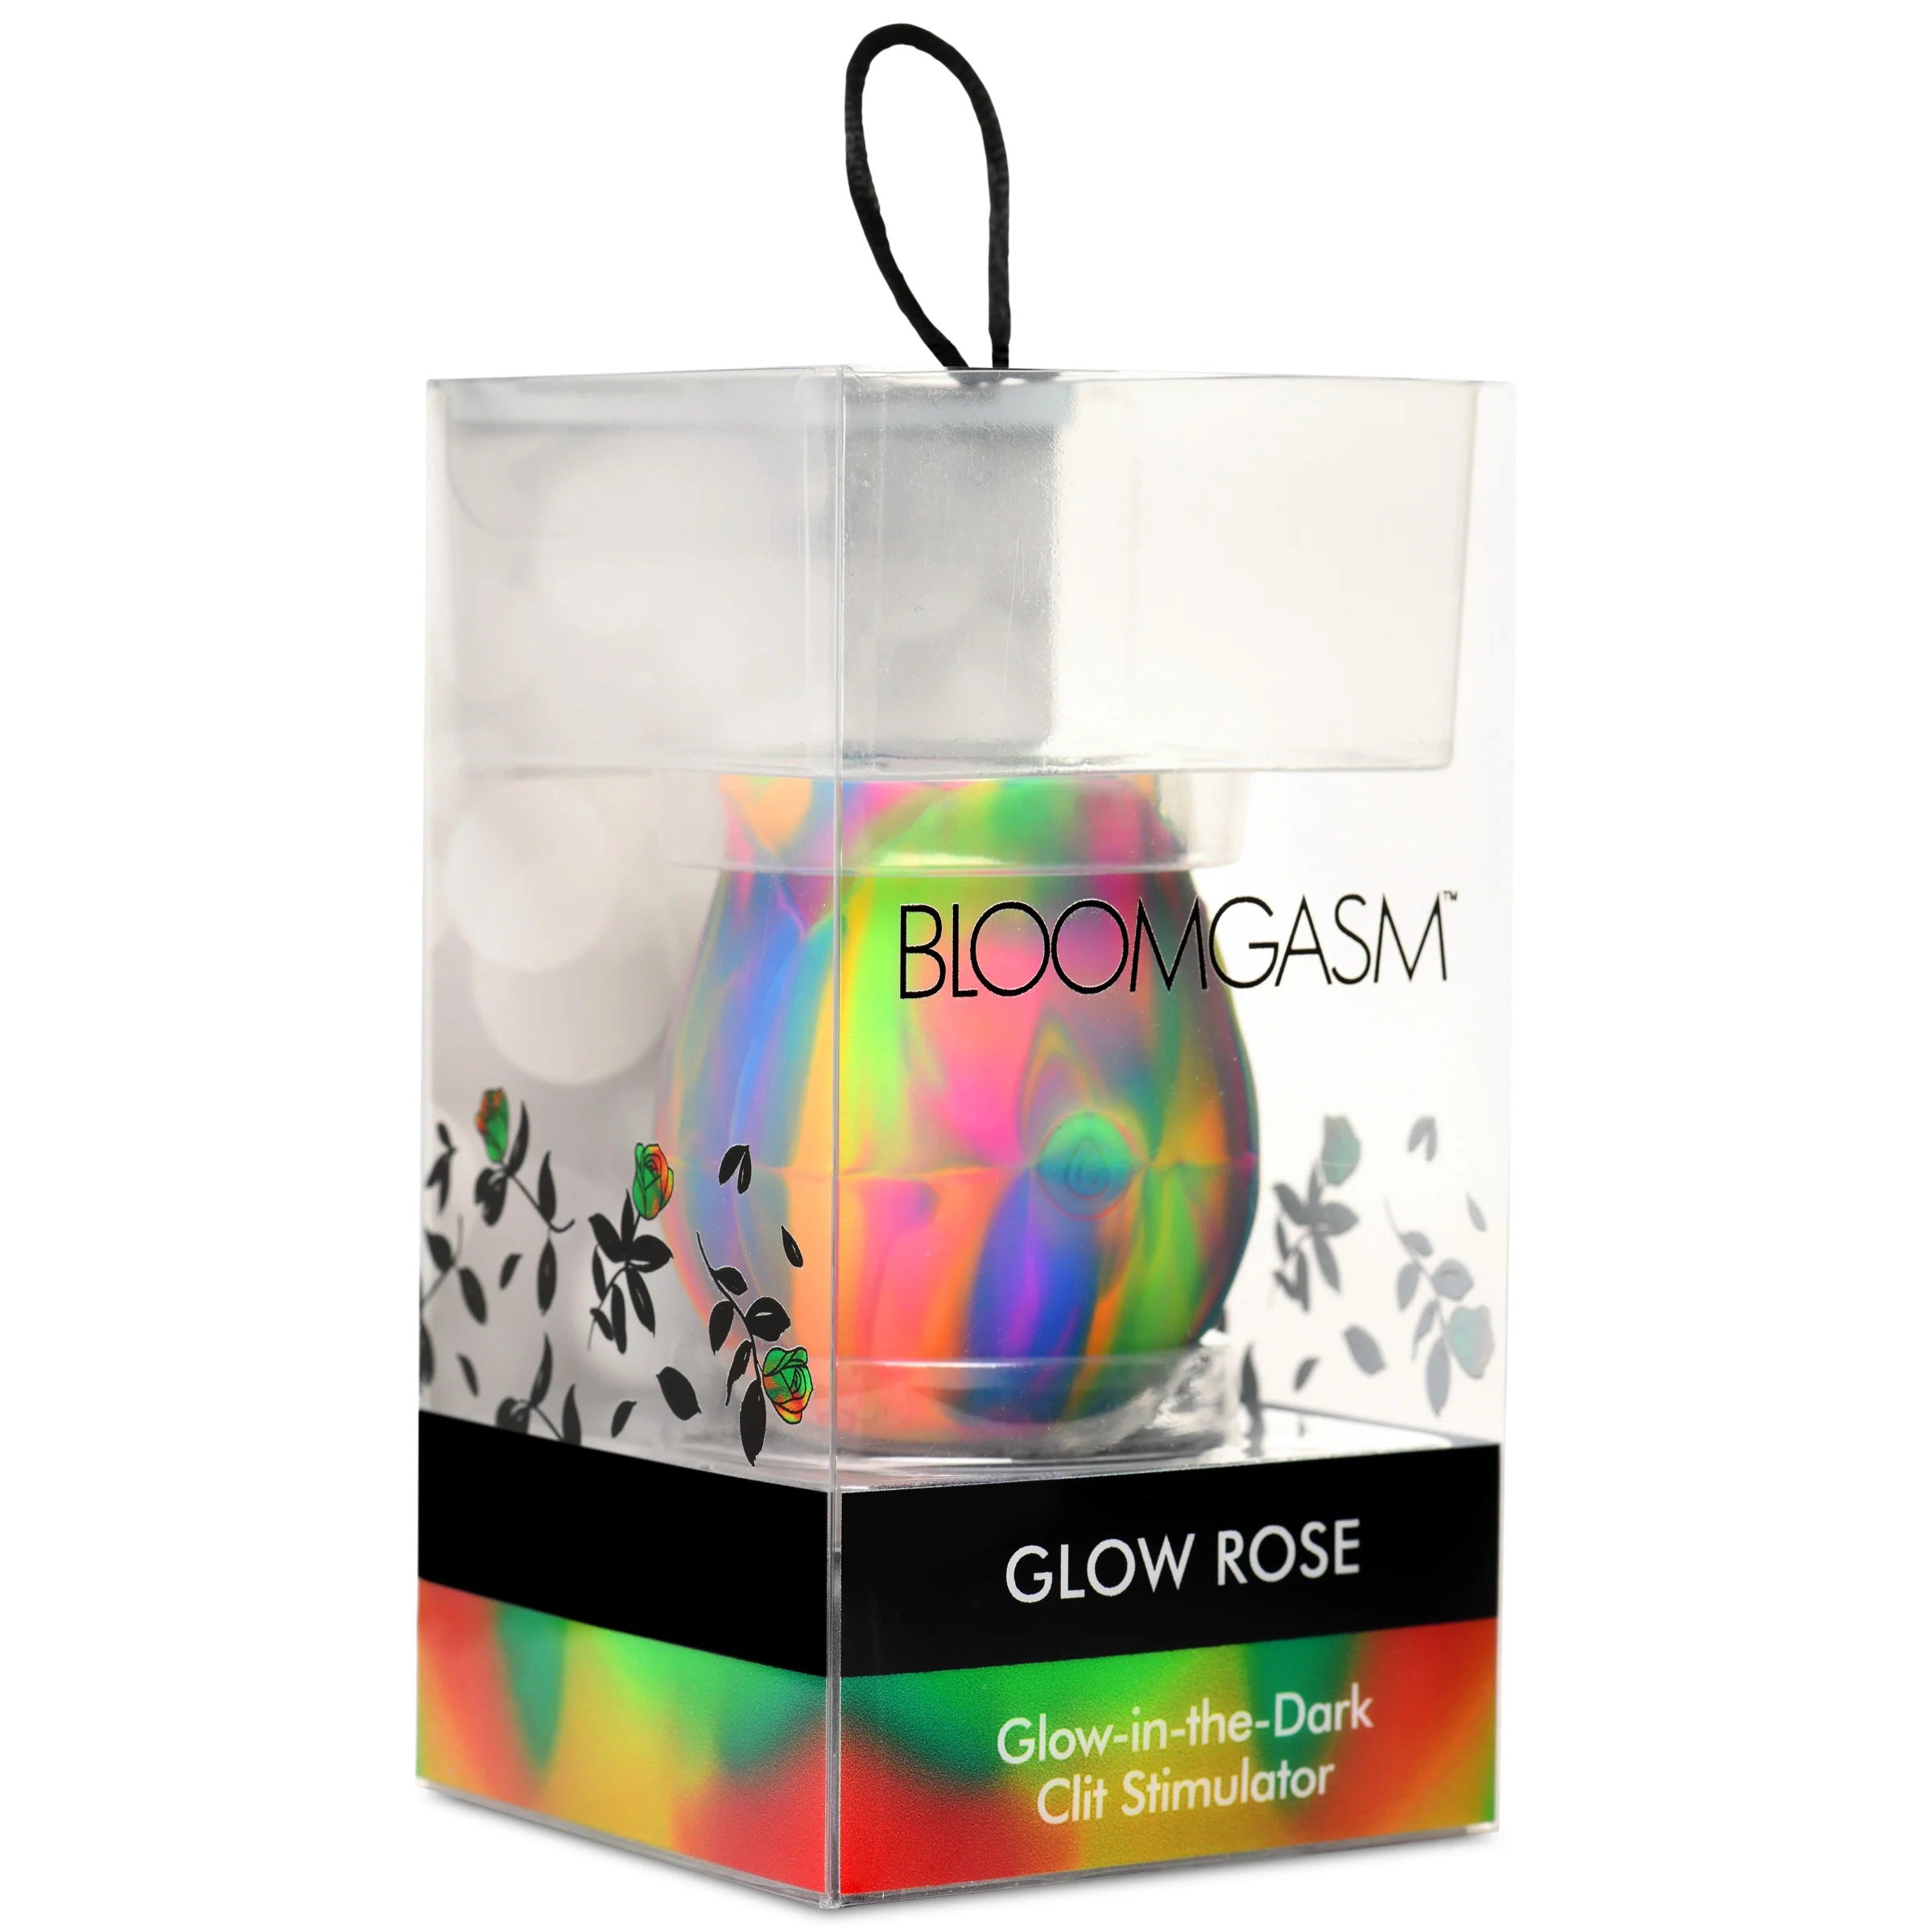 Glow Rose Glow-in-the-Dark Rose Clit Stimulator - Rainbow-4